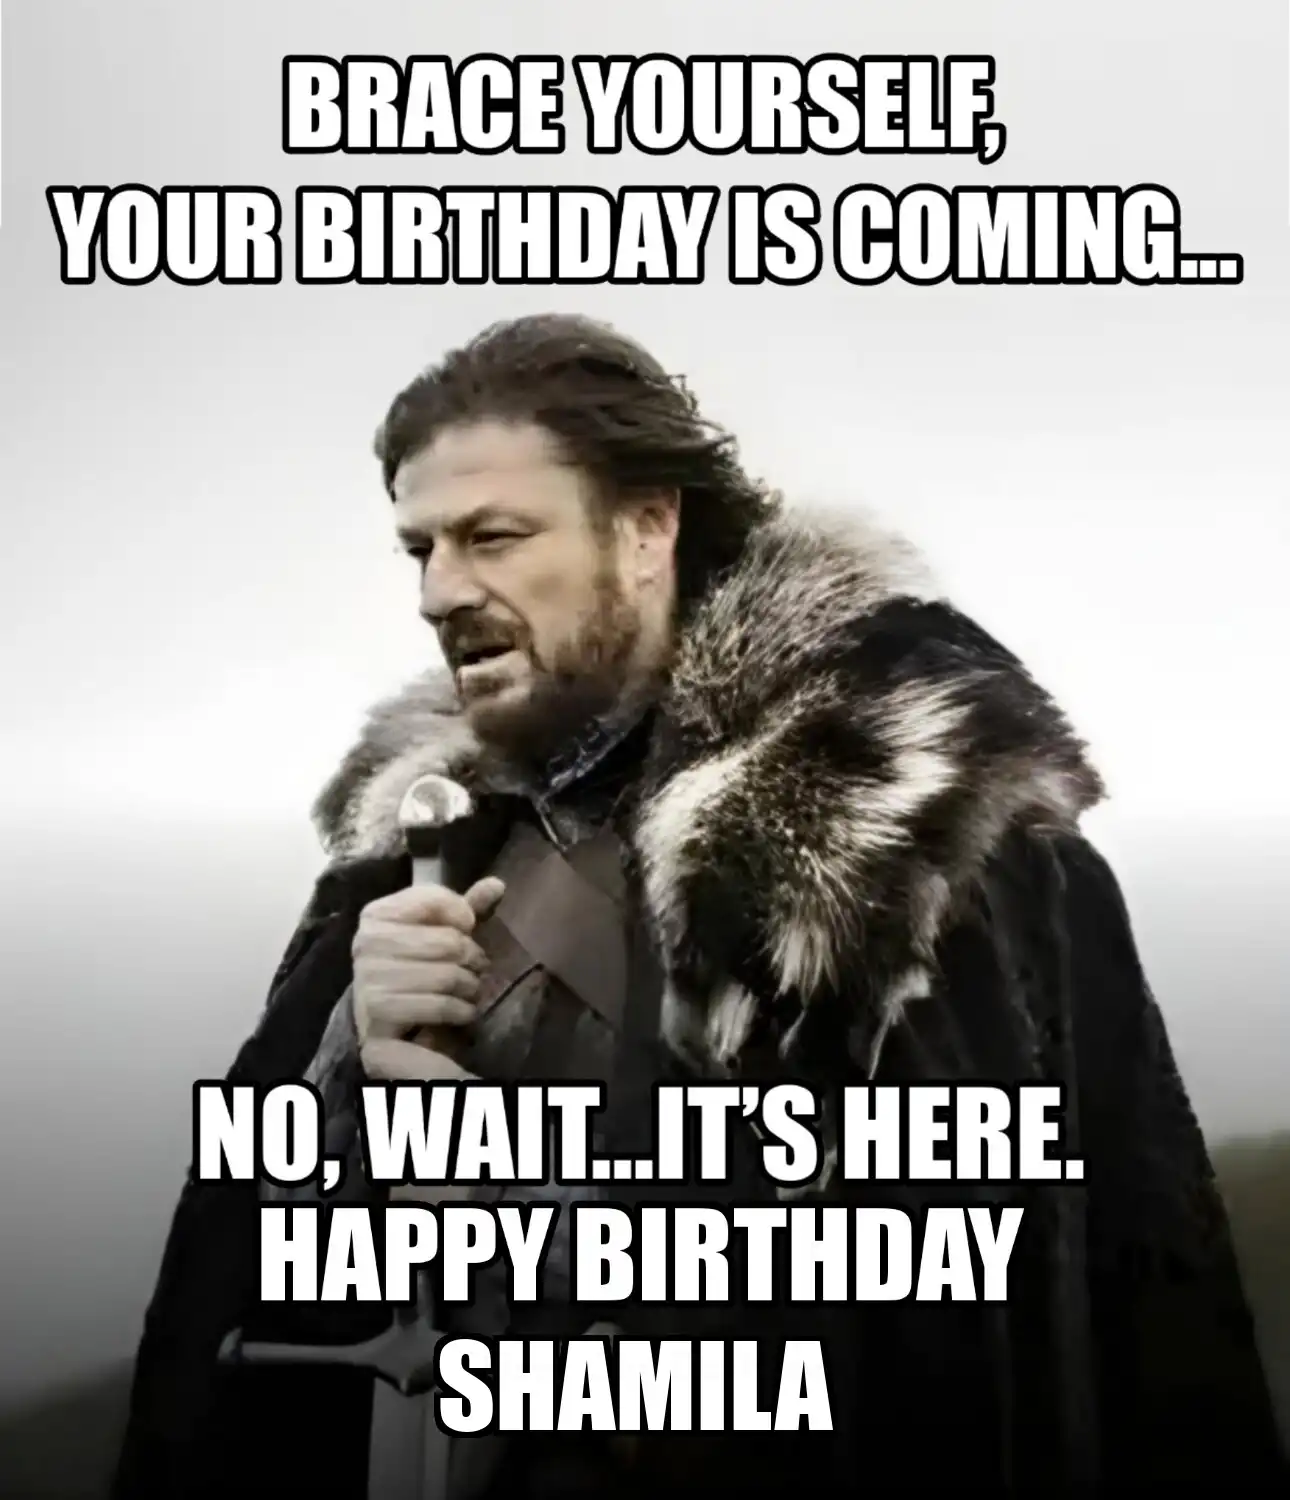 Happy Birthday Shamila Brace Yourself Your Birthday Is Coming Meme